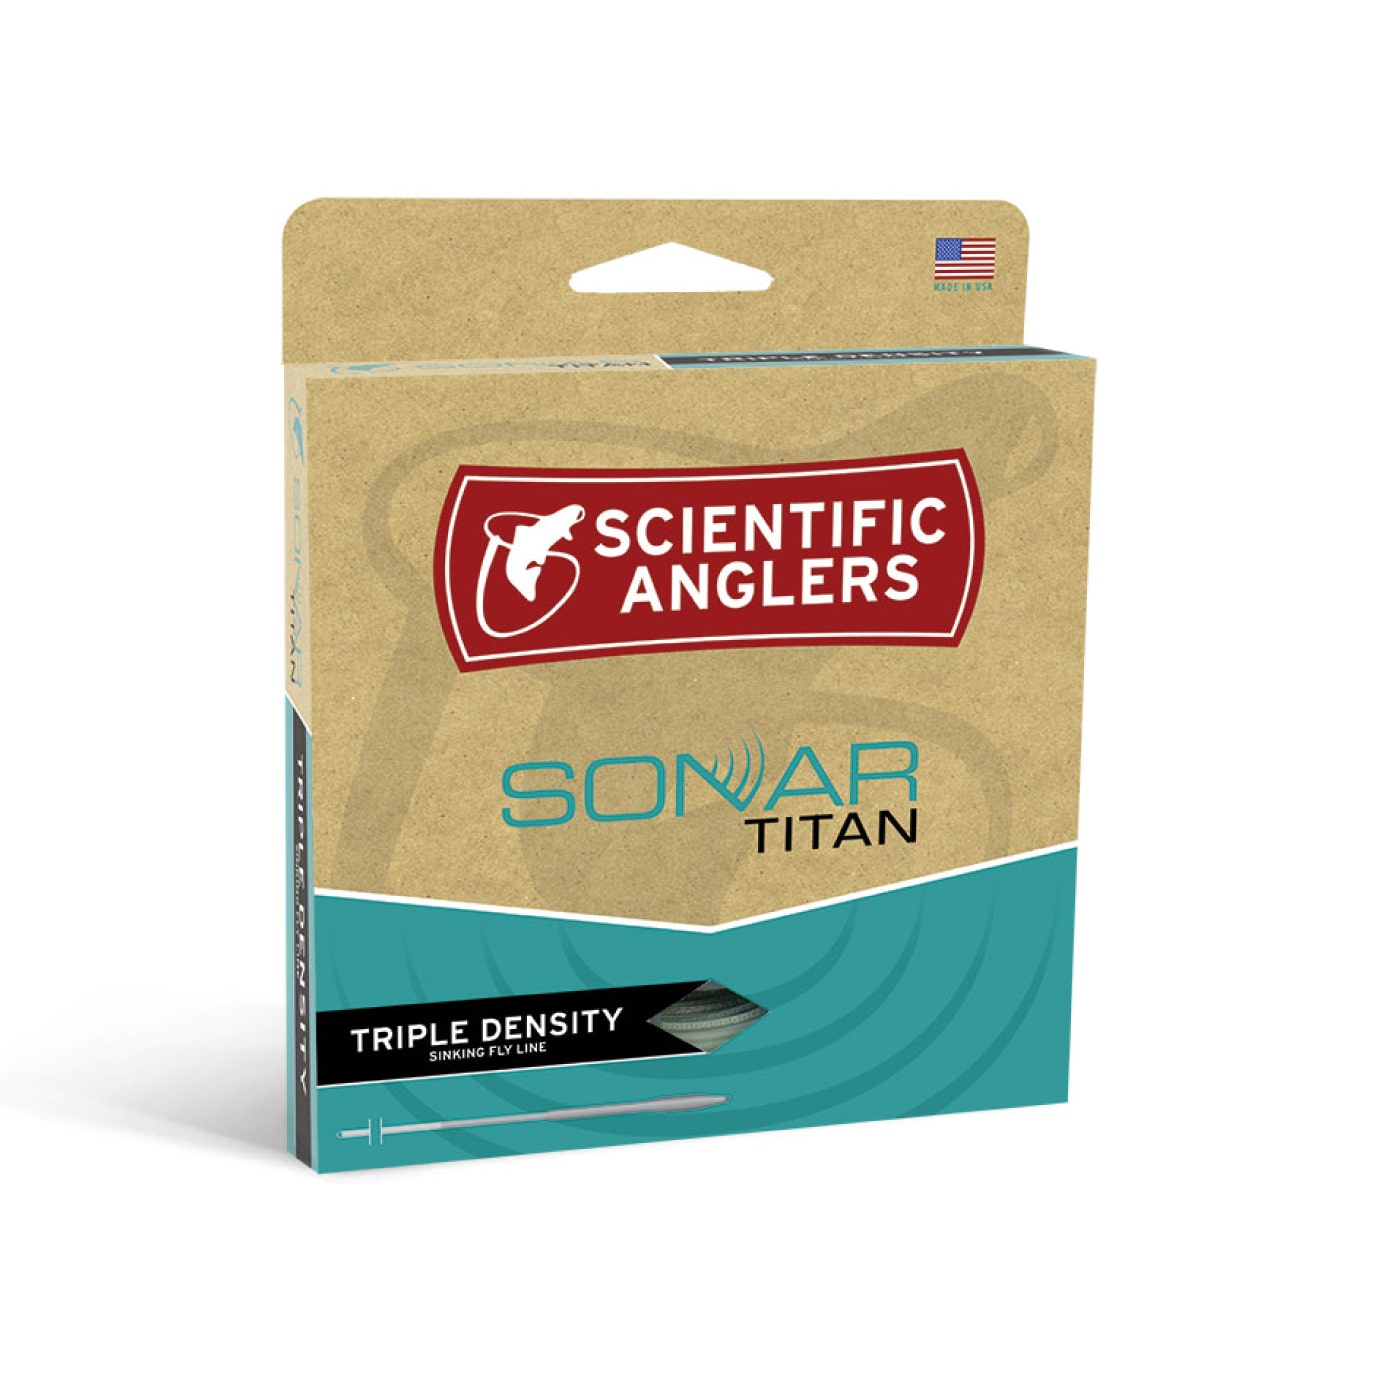 Scientific Anglers Sonar Titan Triple Density Fly Line WF-7-S